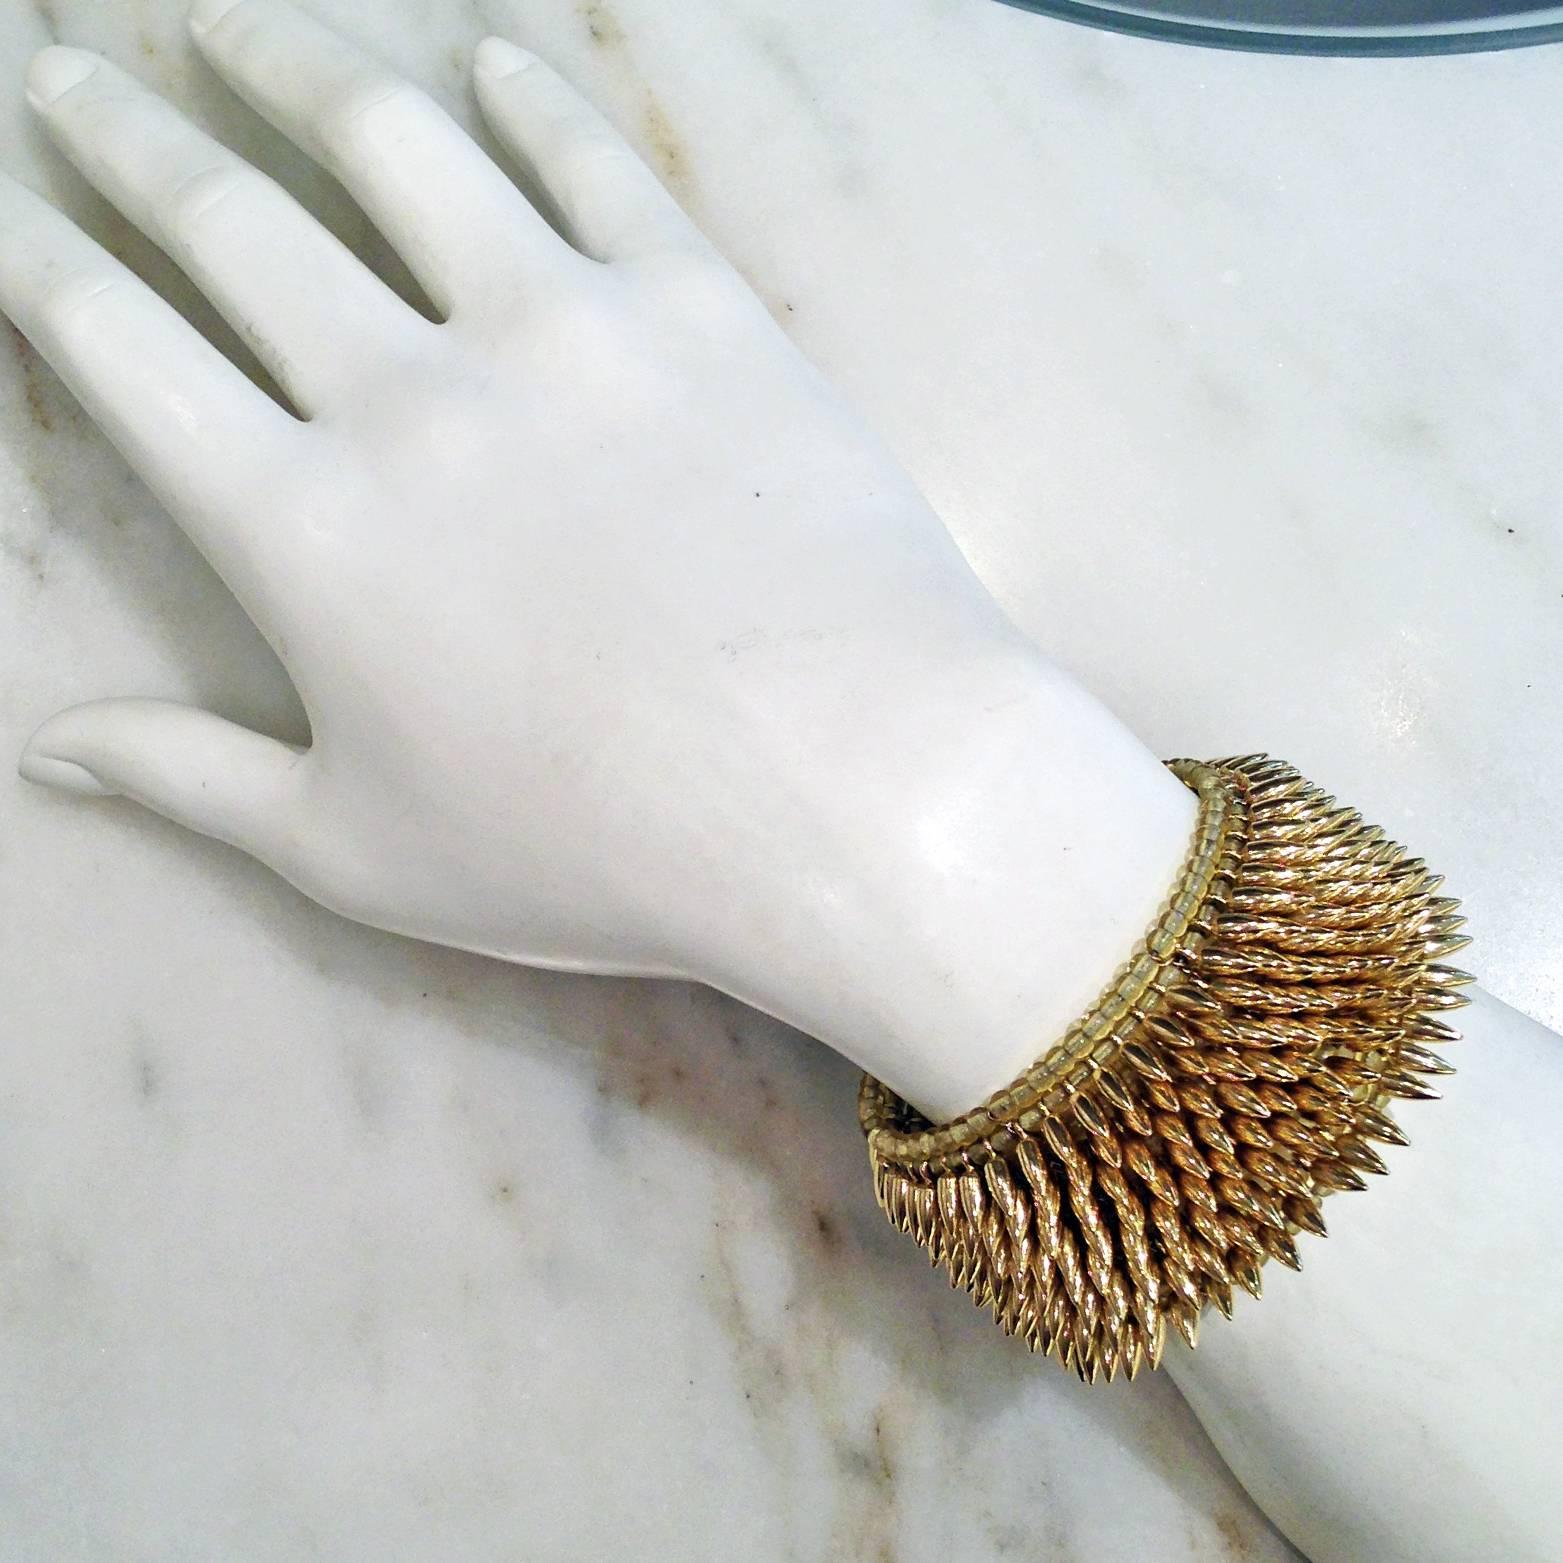 Artist Handmade Shiny Gold-Plated Bead Topaz Glass Flexible Cuff